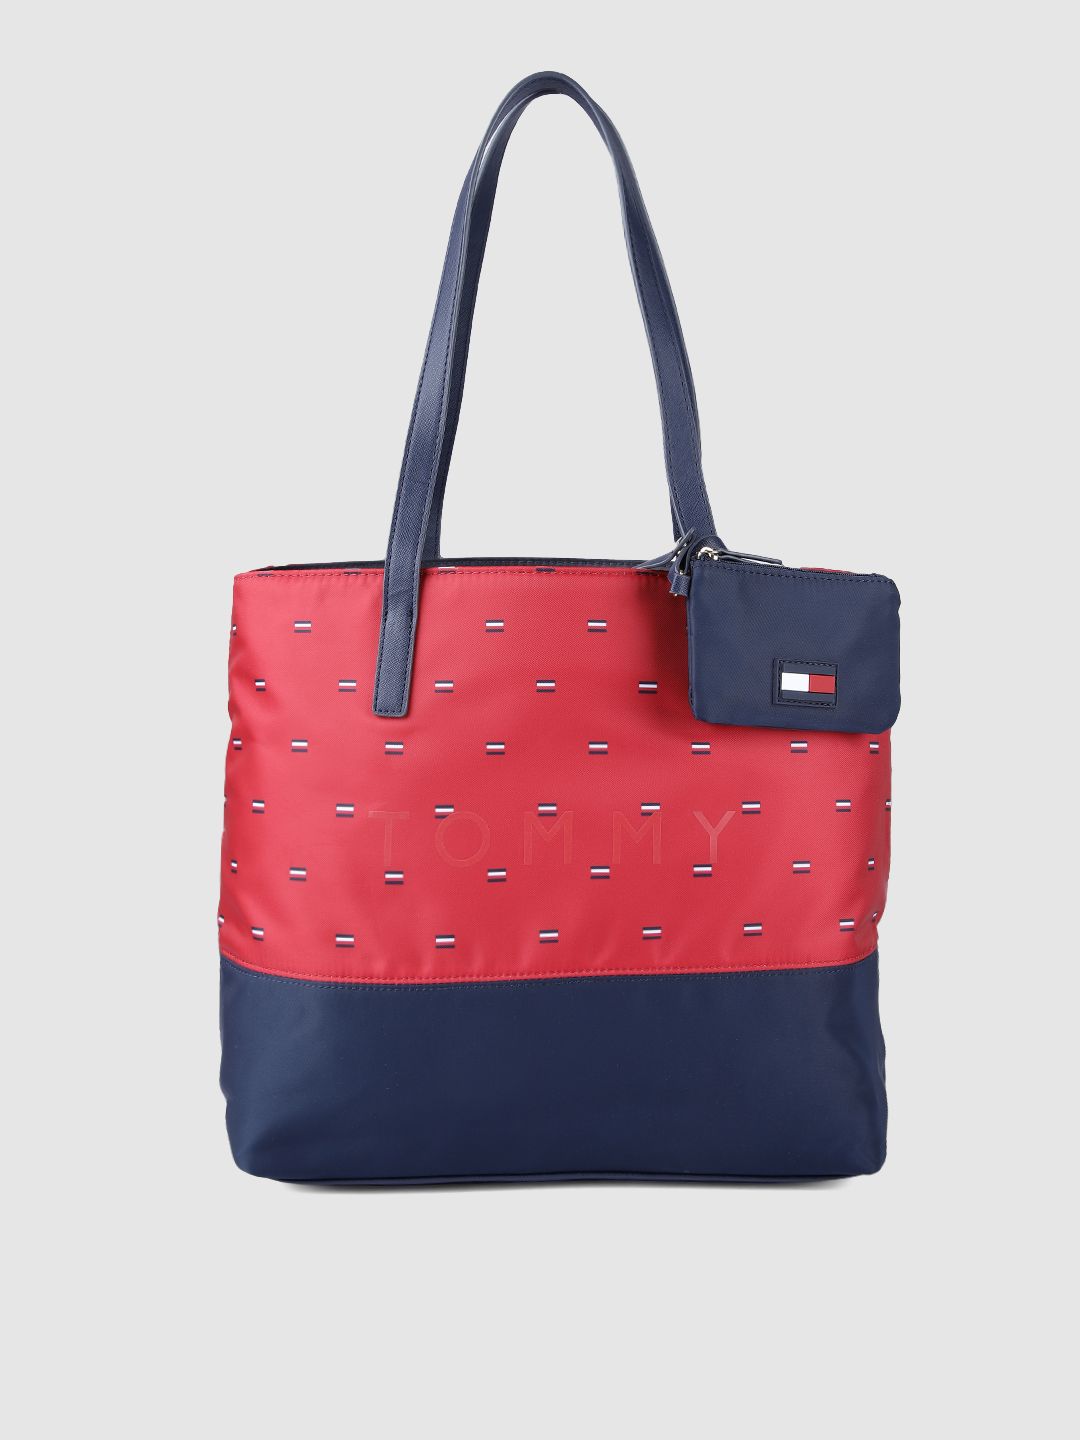 Tommy Hilfiger Red & Blue Printed Shoulder Bag Price in India